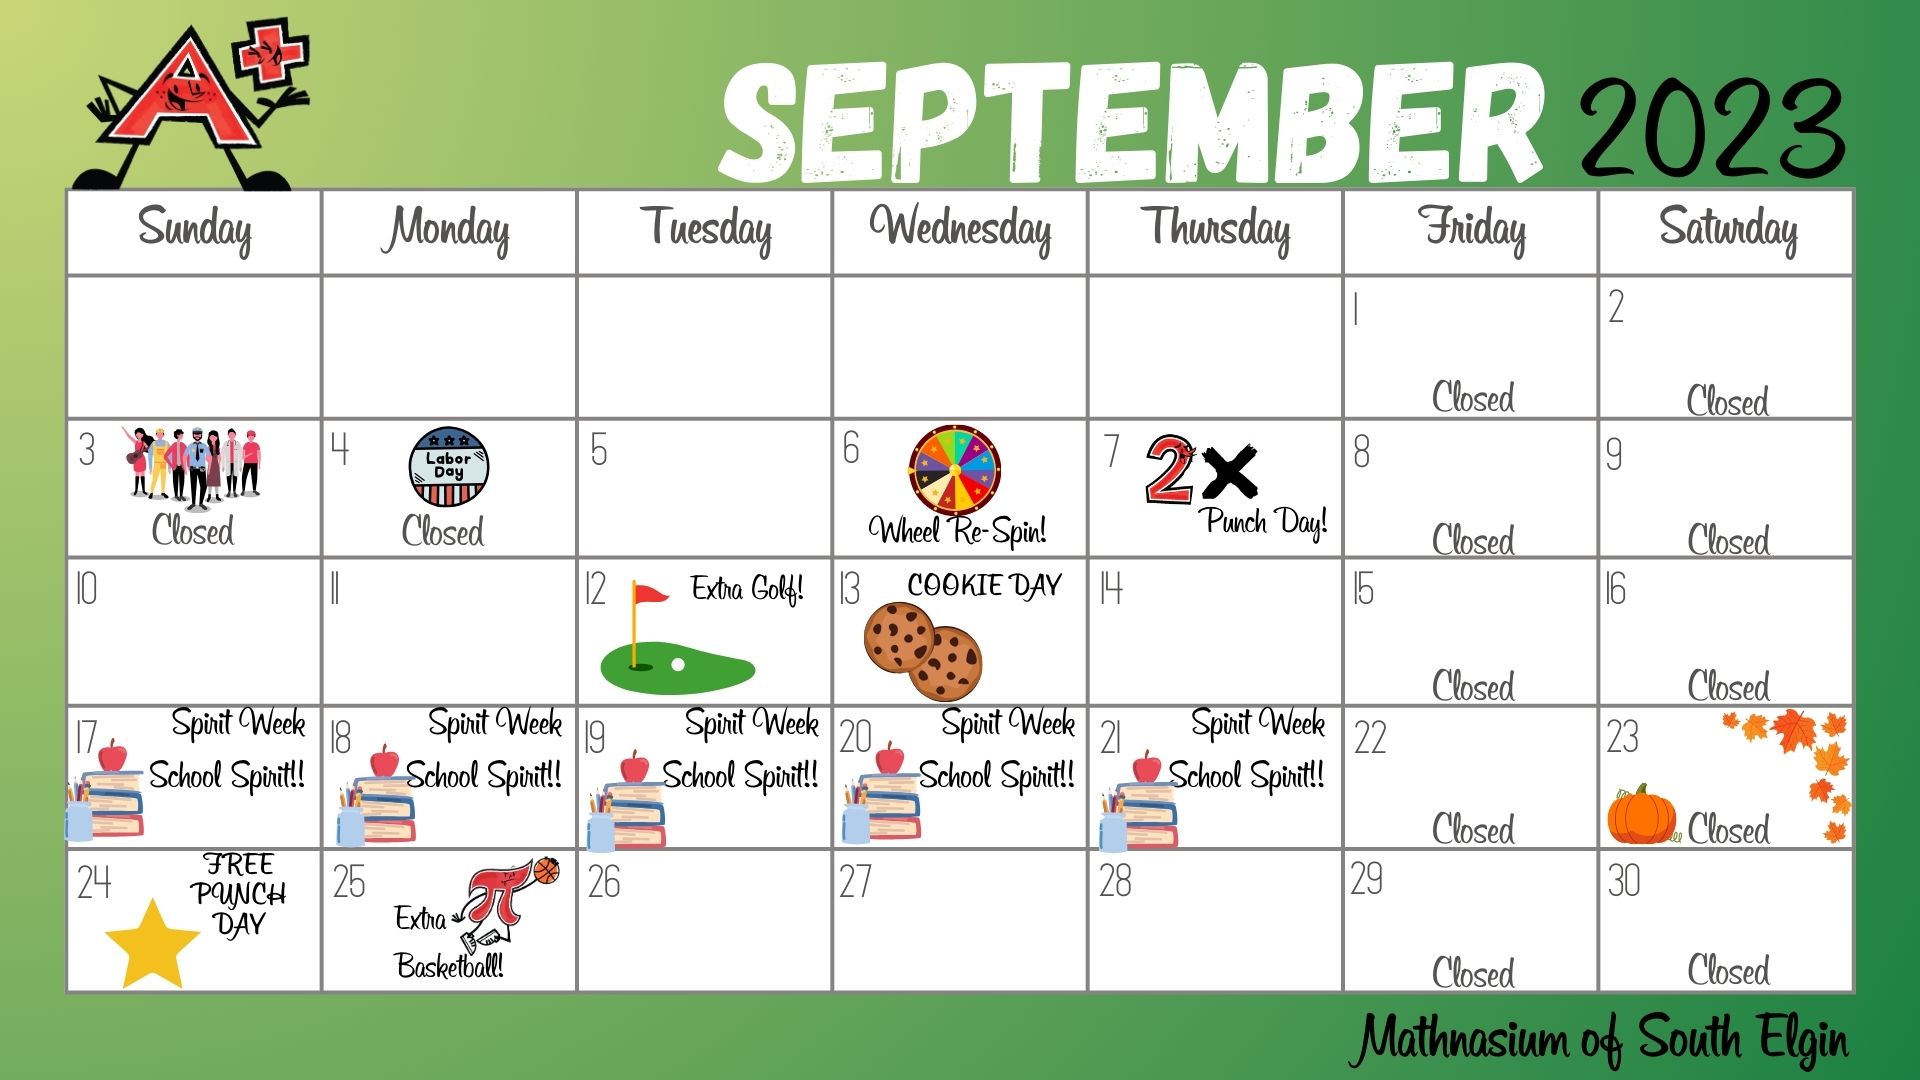 September Fun Calendar